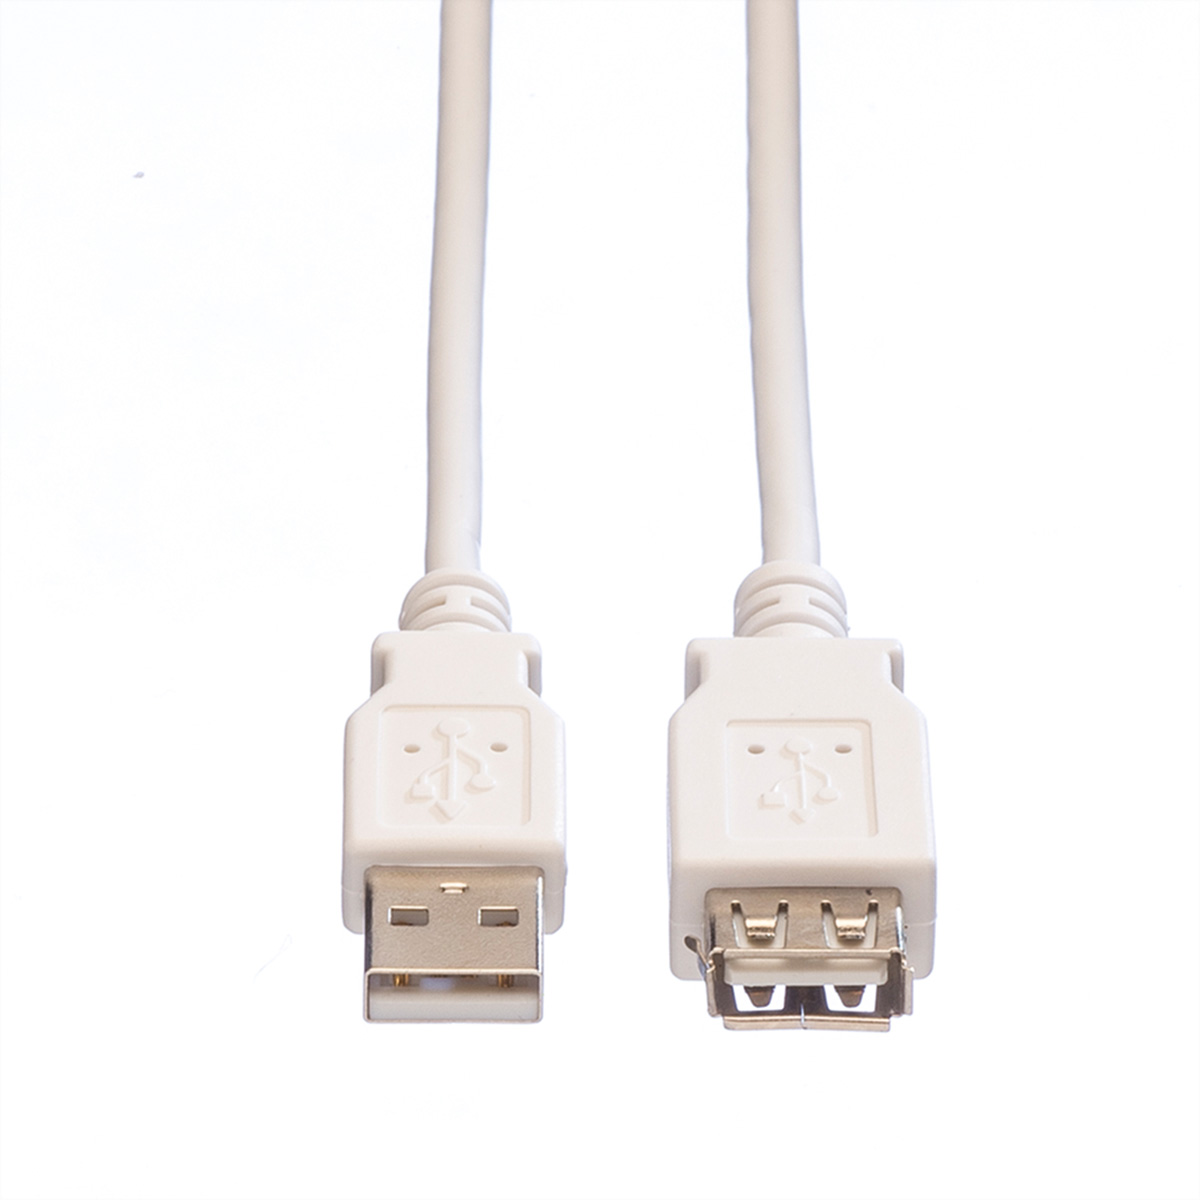 VALUE USB 2.0 Kabel Verlängerungskabel 2.0 USB